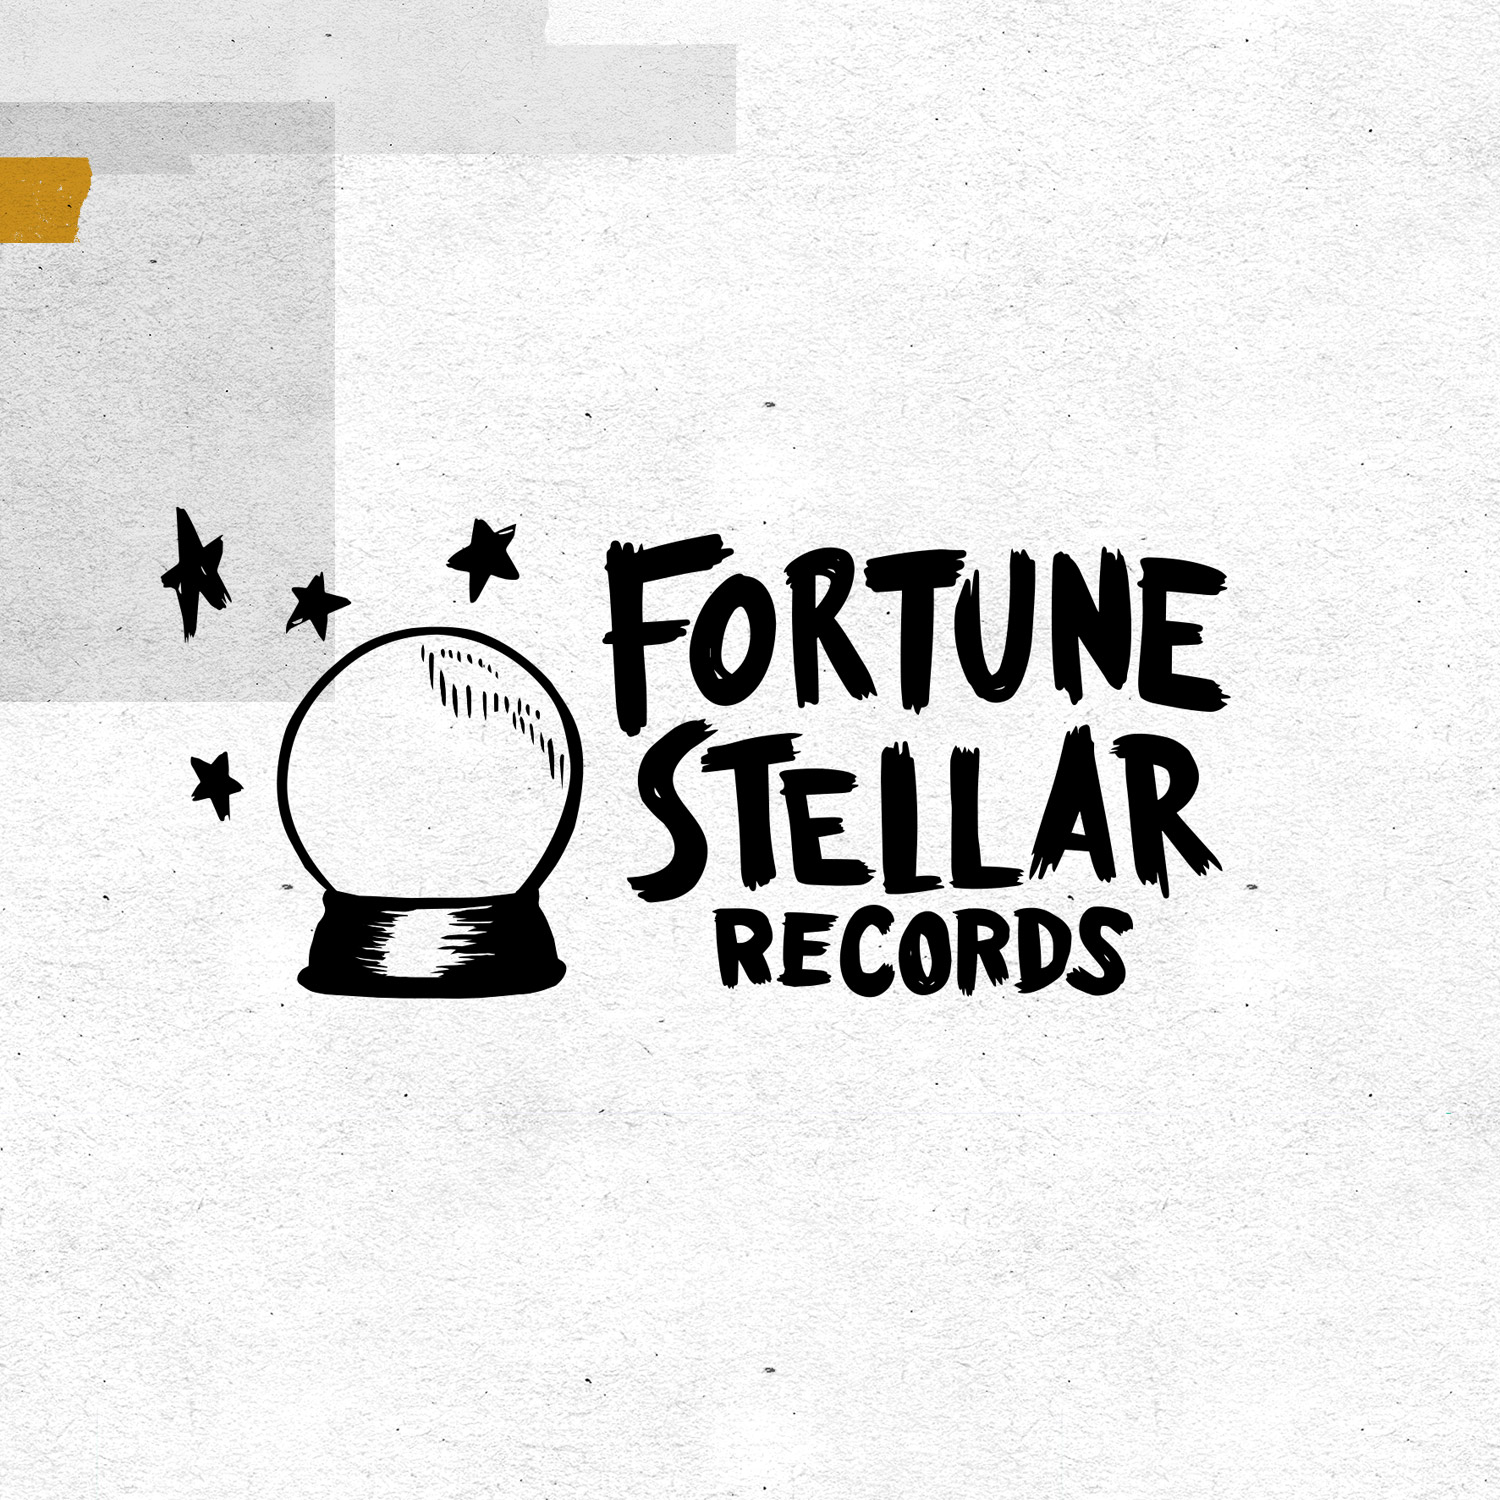 News - Fortune Stellar Records